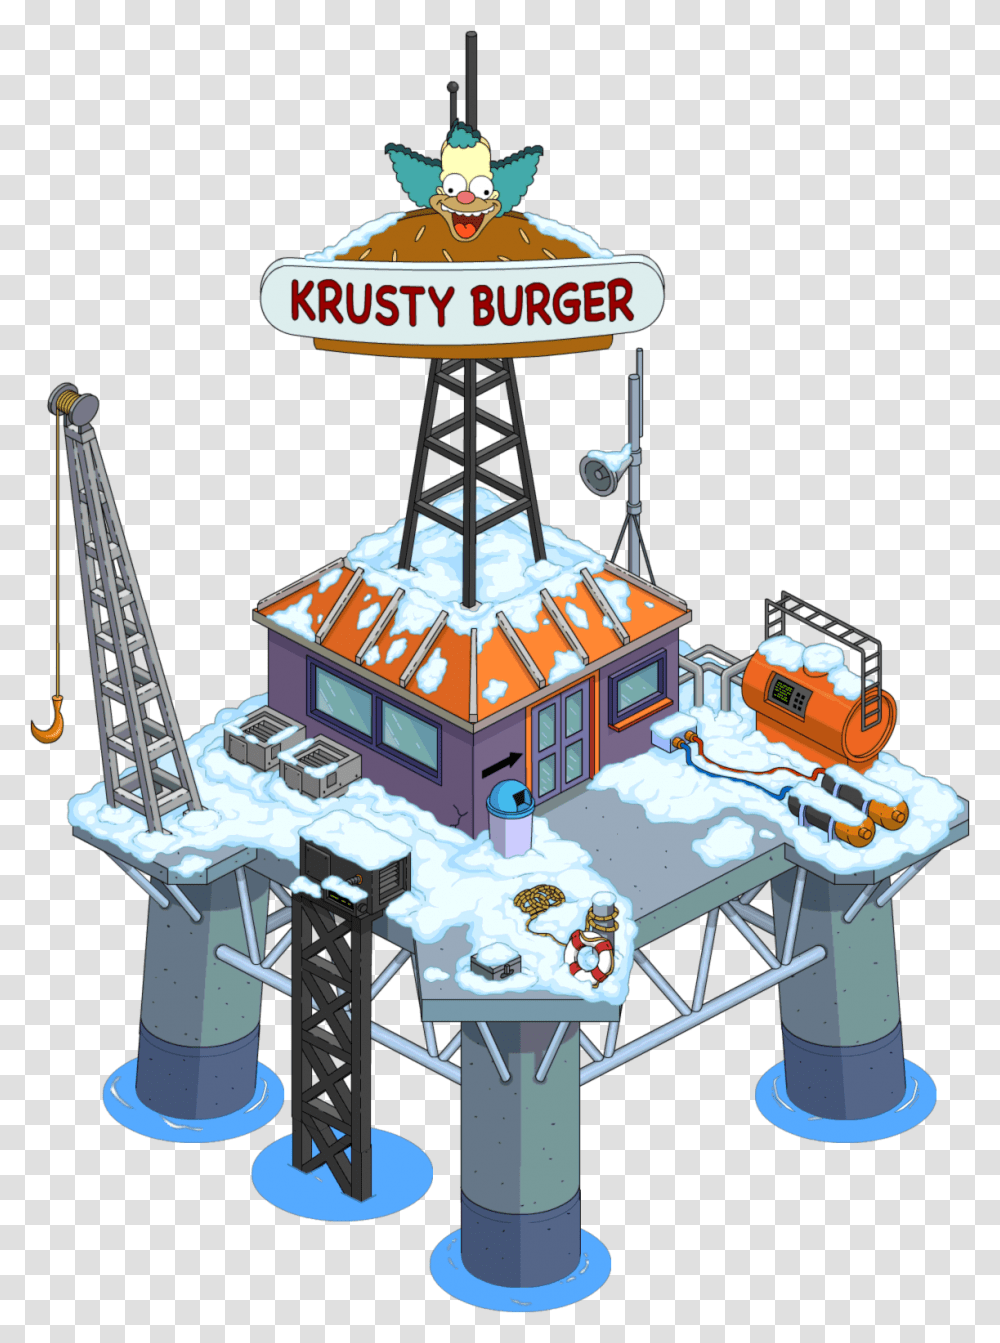 Clip Art Krusty Burger Rig The Krusty Burger Rig, Building, Architecture, Construction Crane, Tower Transparent Png